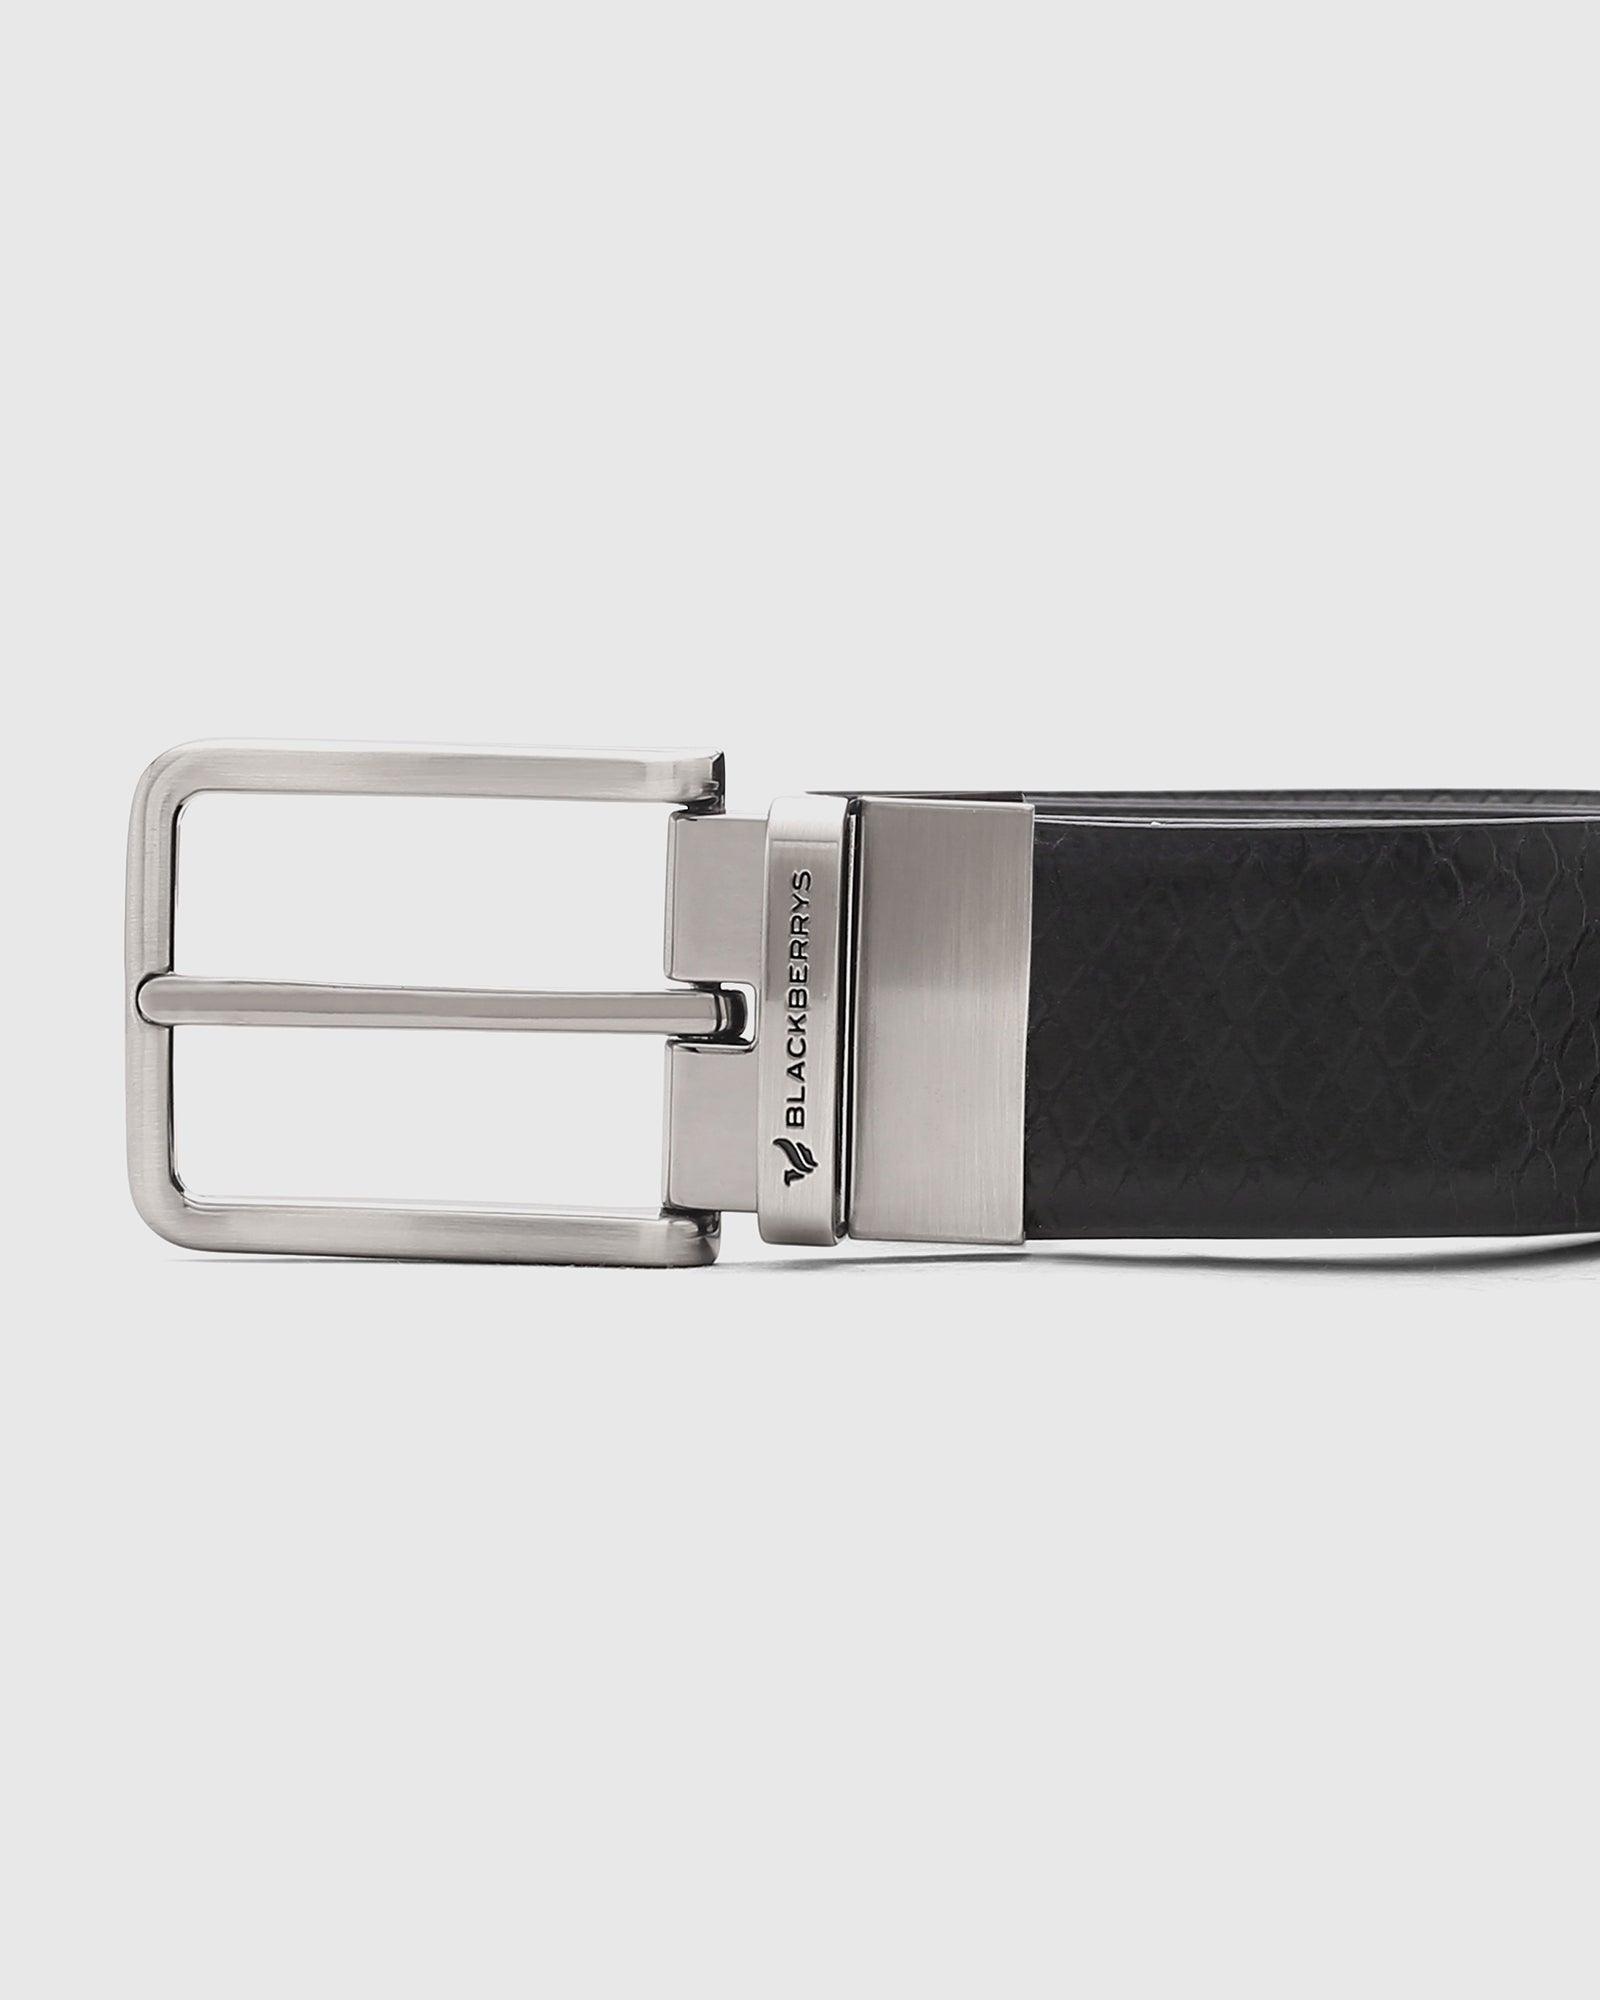 Leather Reversible Black Brown Textured Belt - Serin